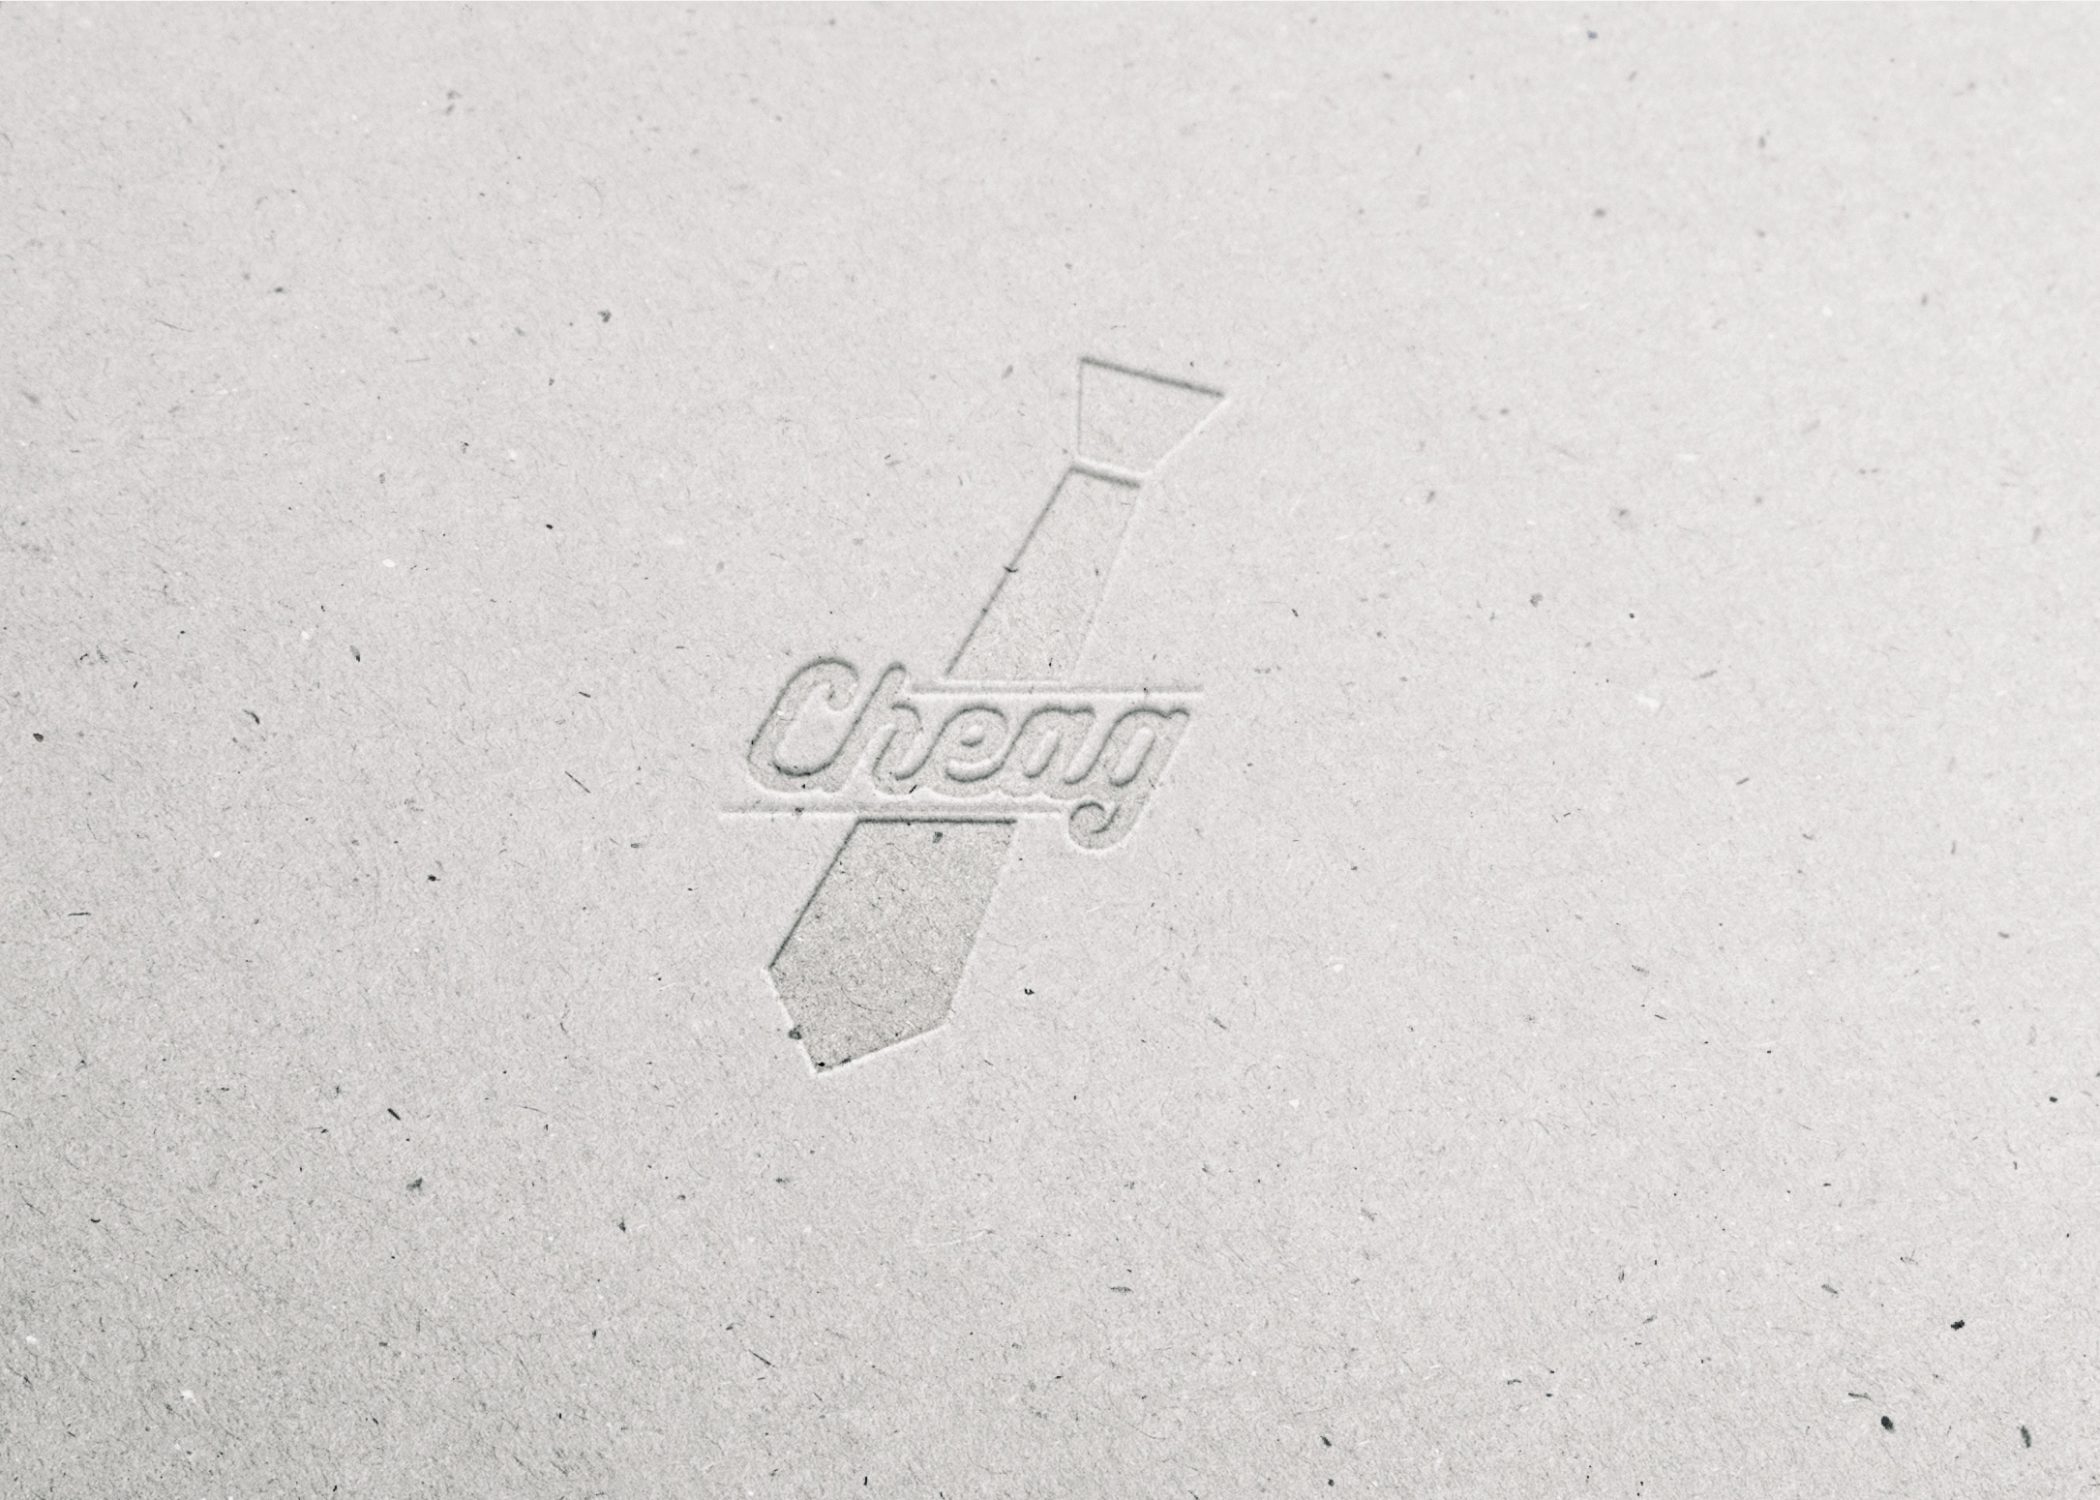 logotype design for clothing brand